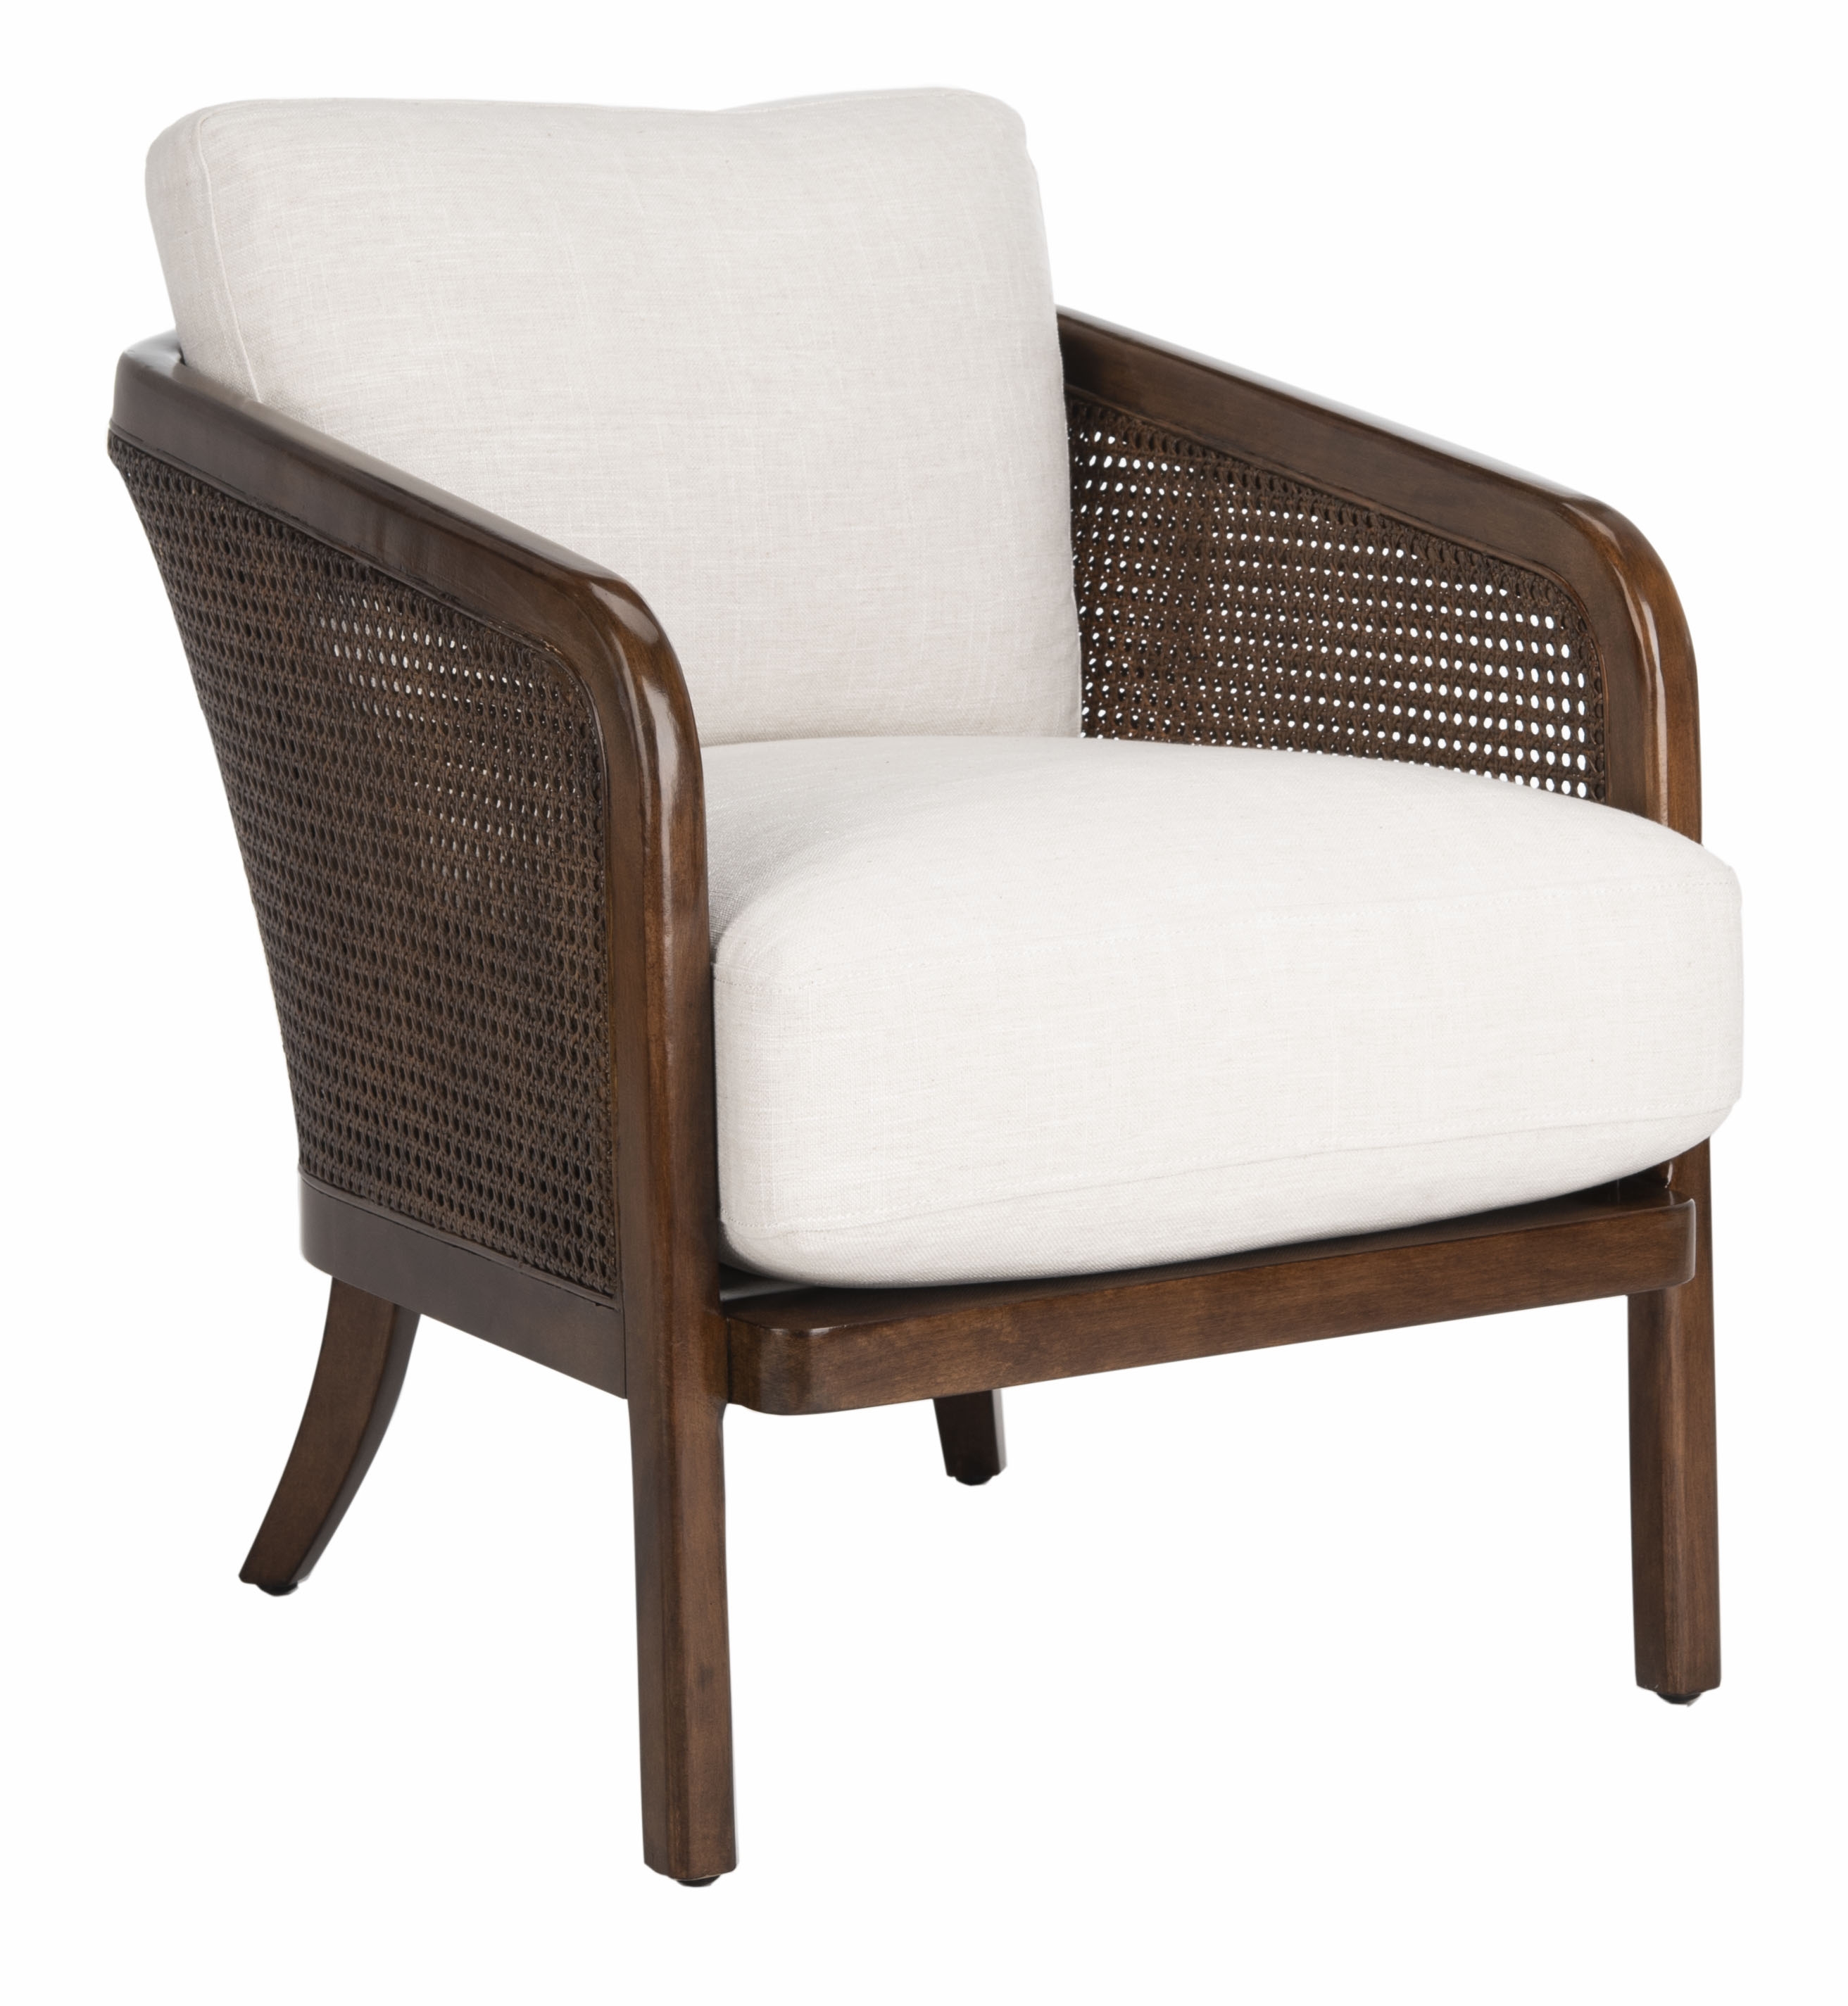 Caruso Barrel Back Chair - Oatmeal - Arlo Home - Image 1